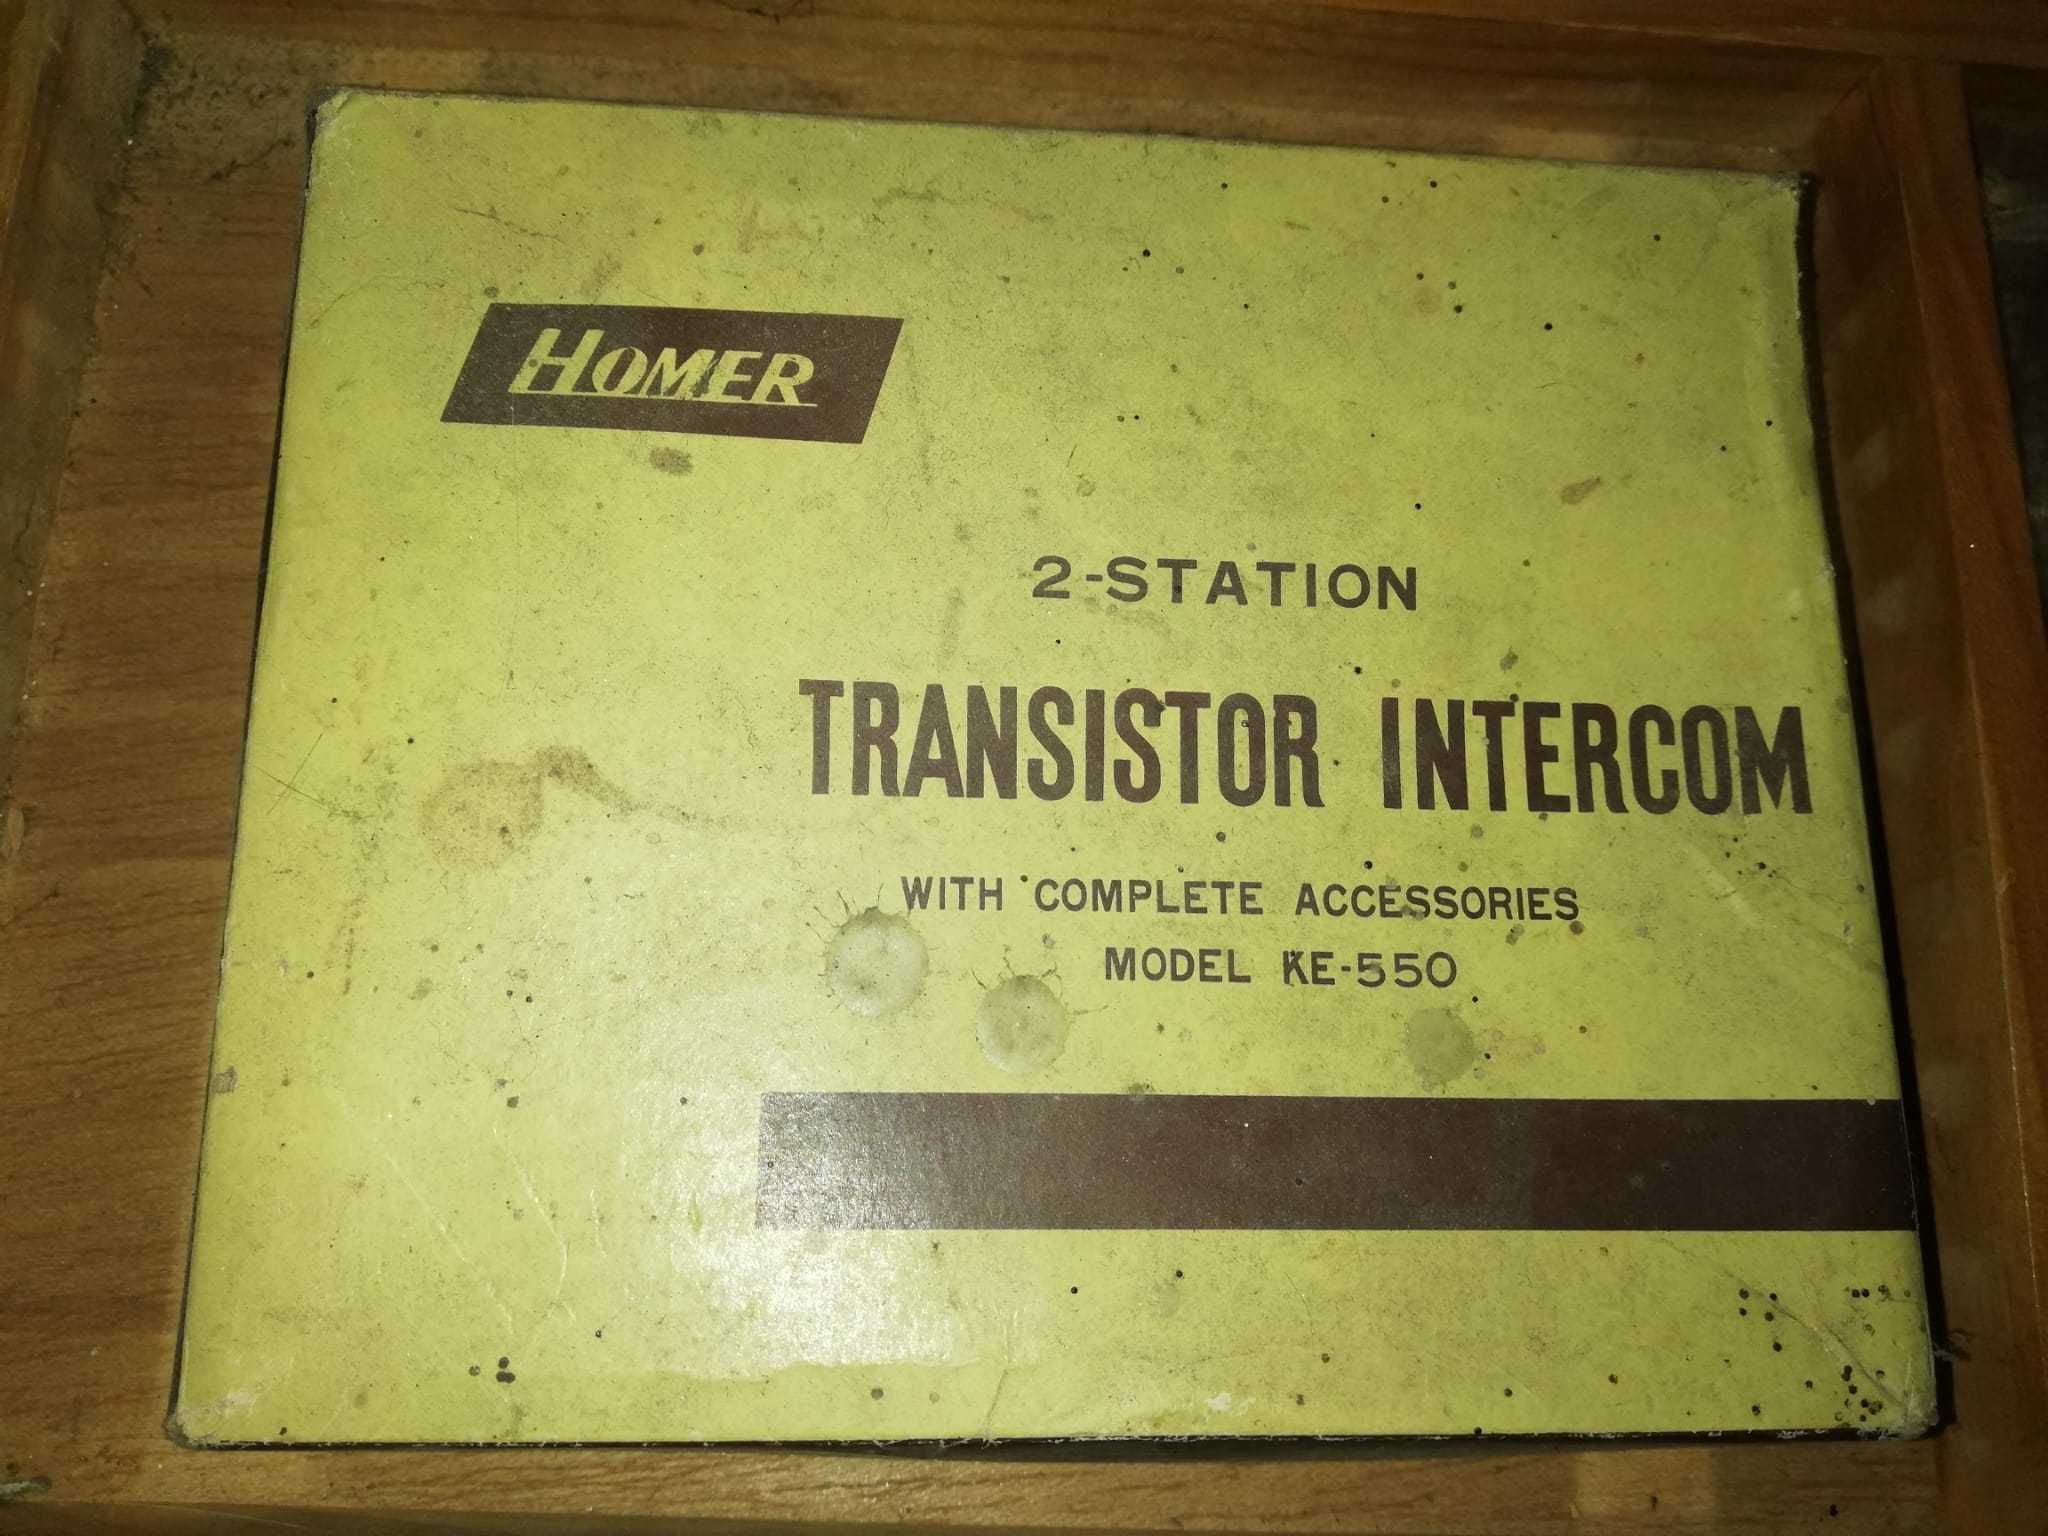 Transistor intercom KE-550